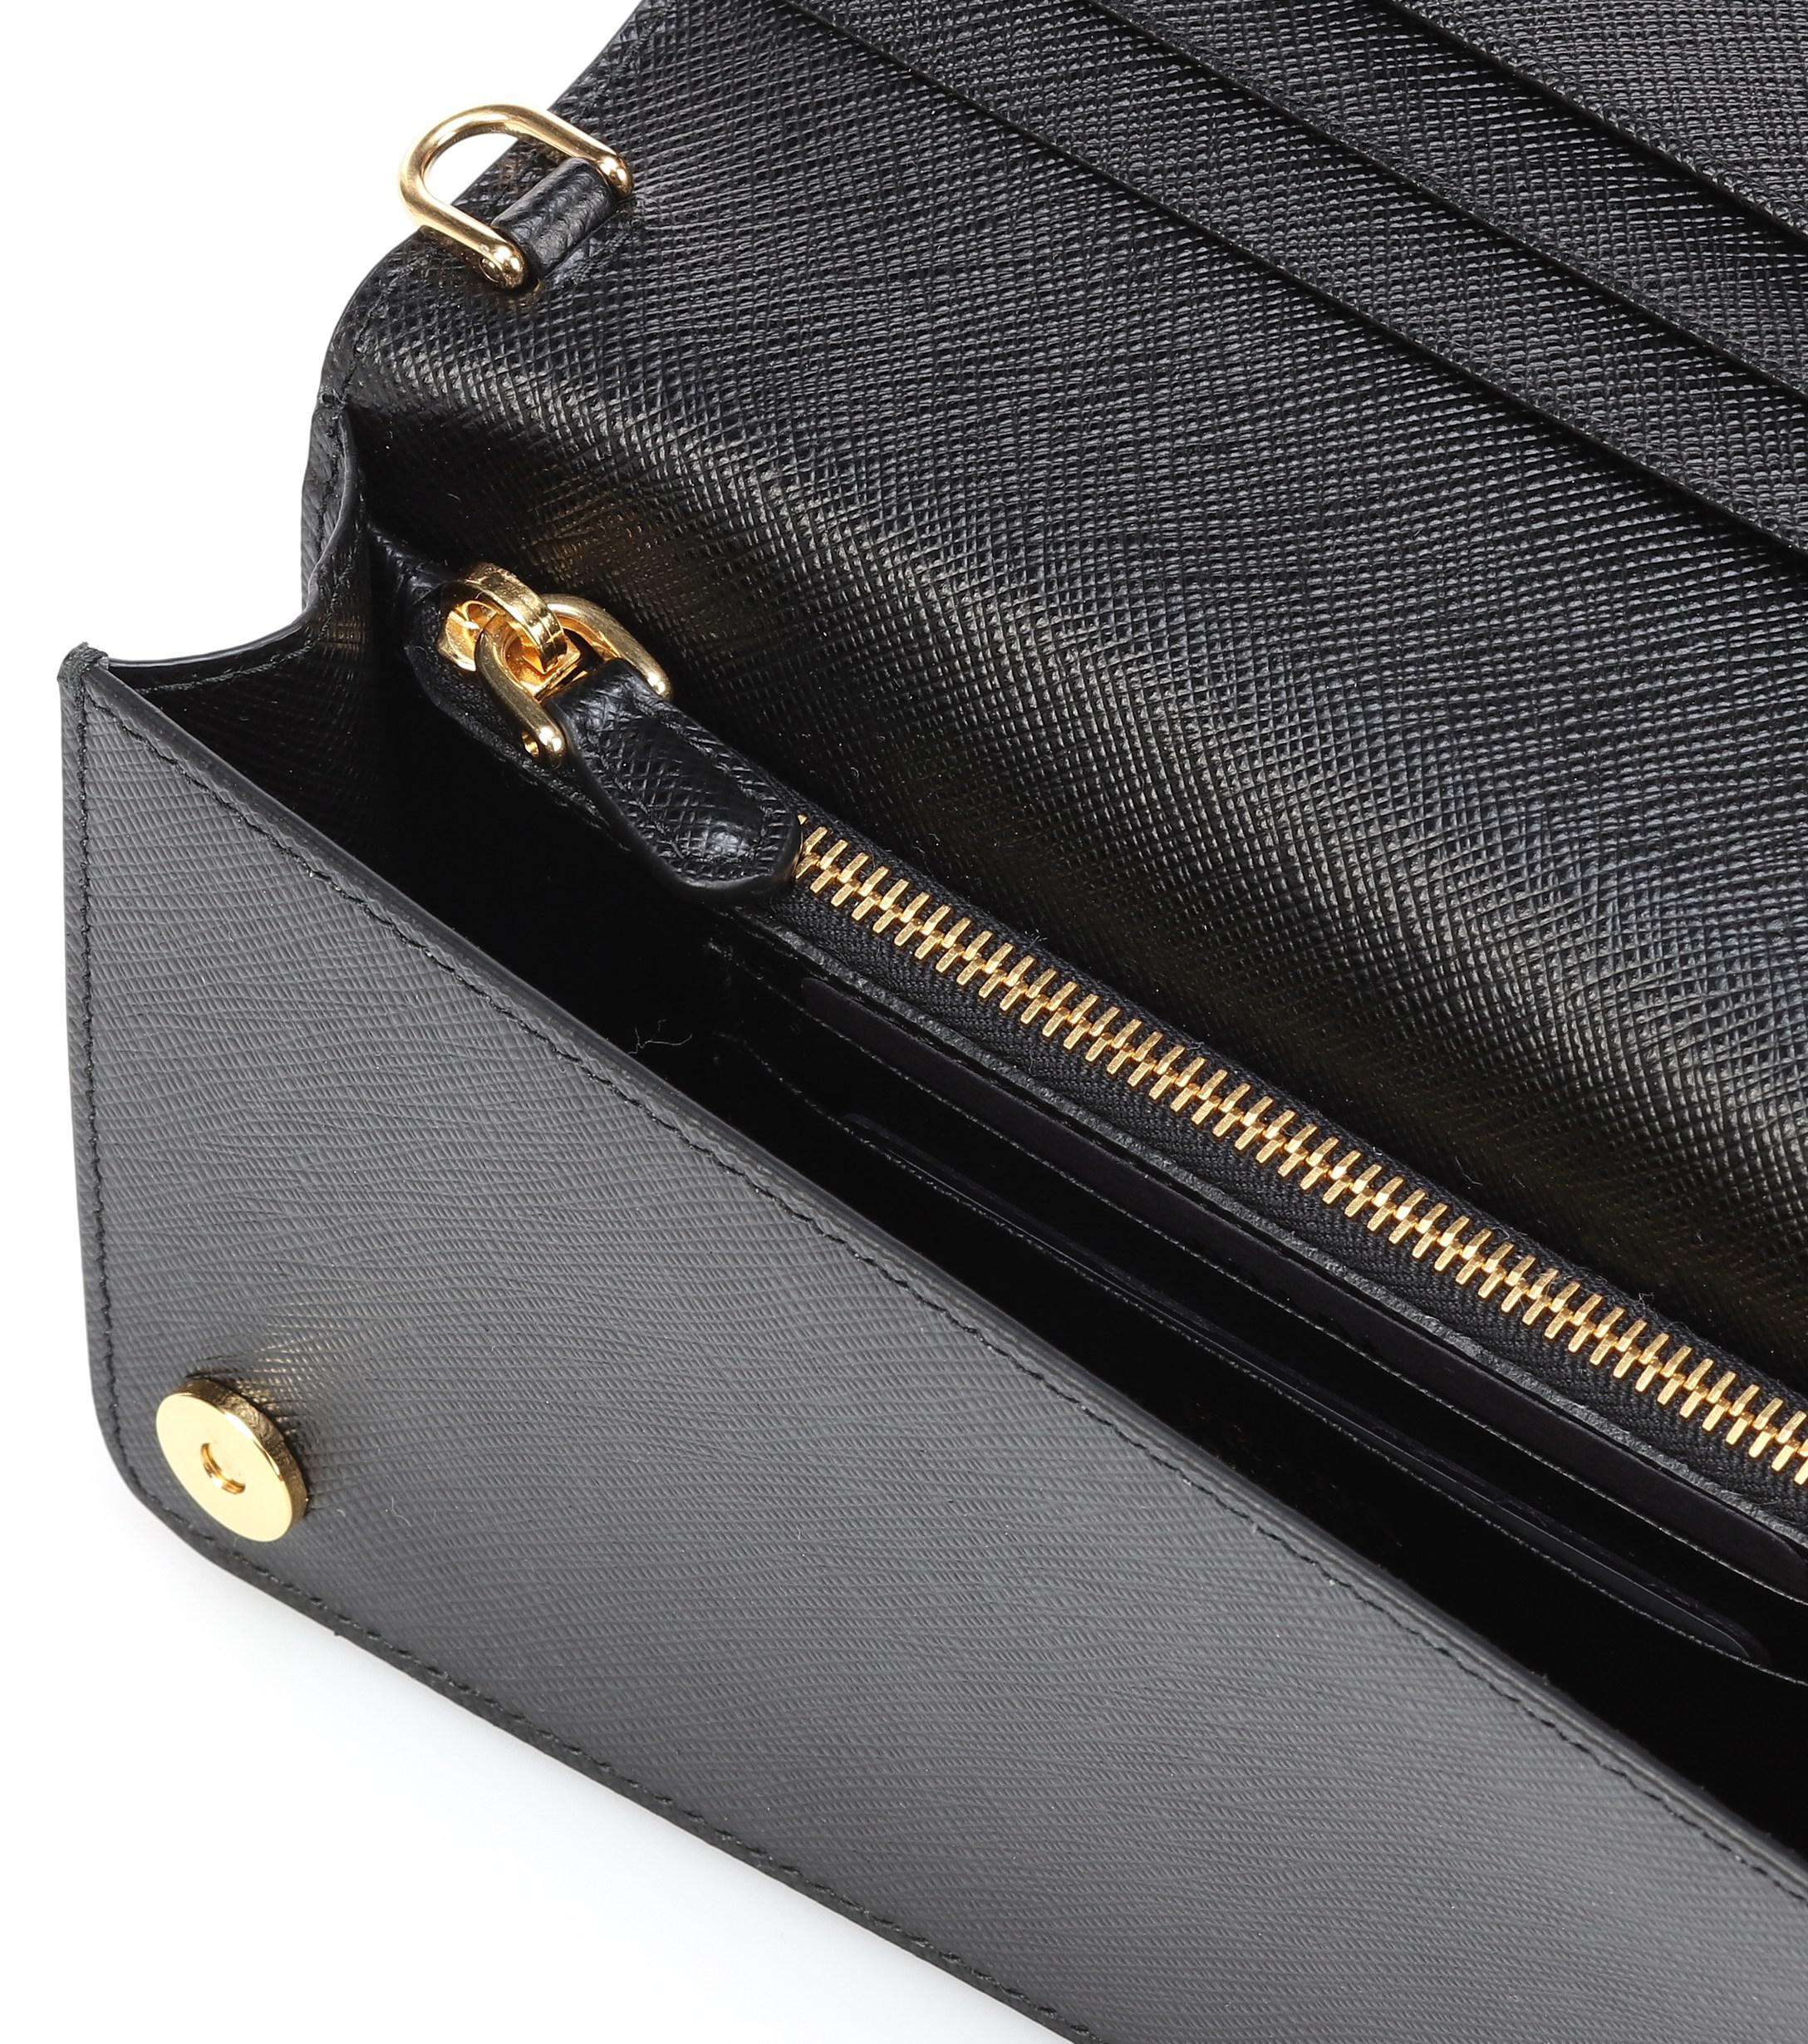 Prada Saffiano Leather Crossbody Bag in Nero (Black) - Lyst